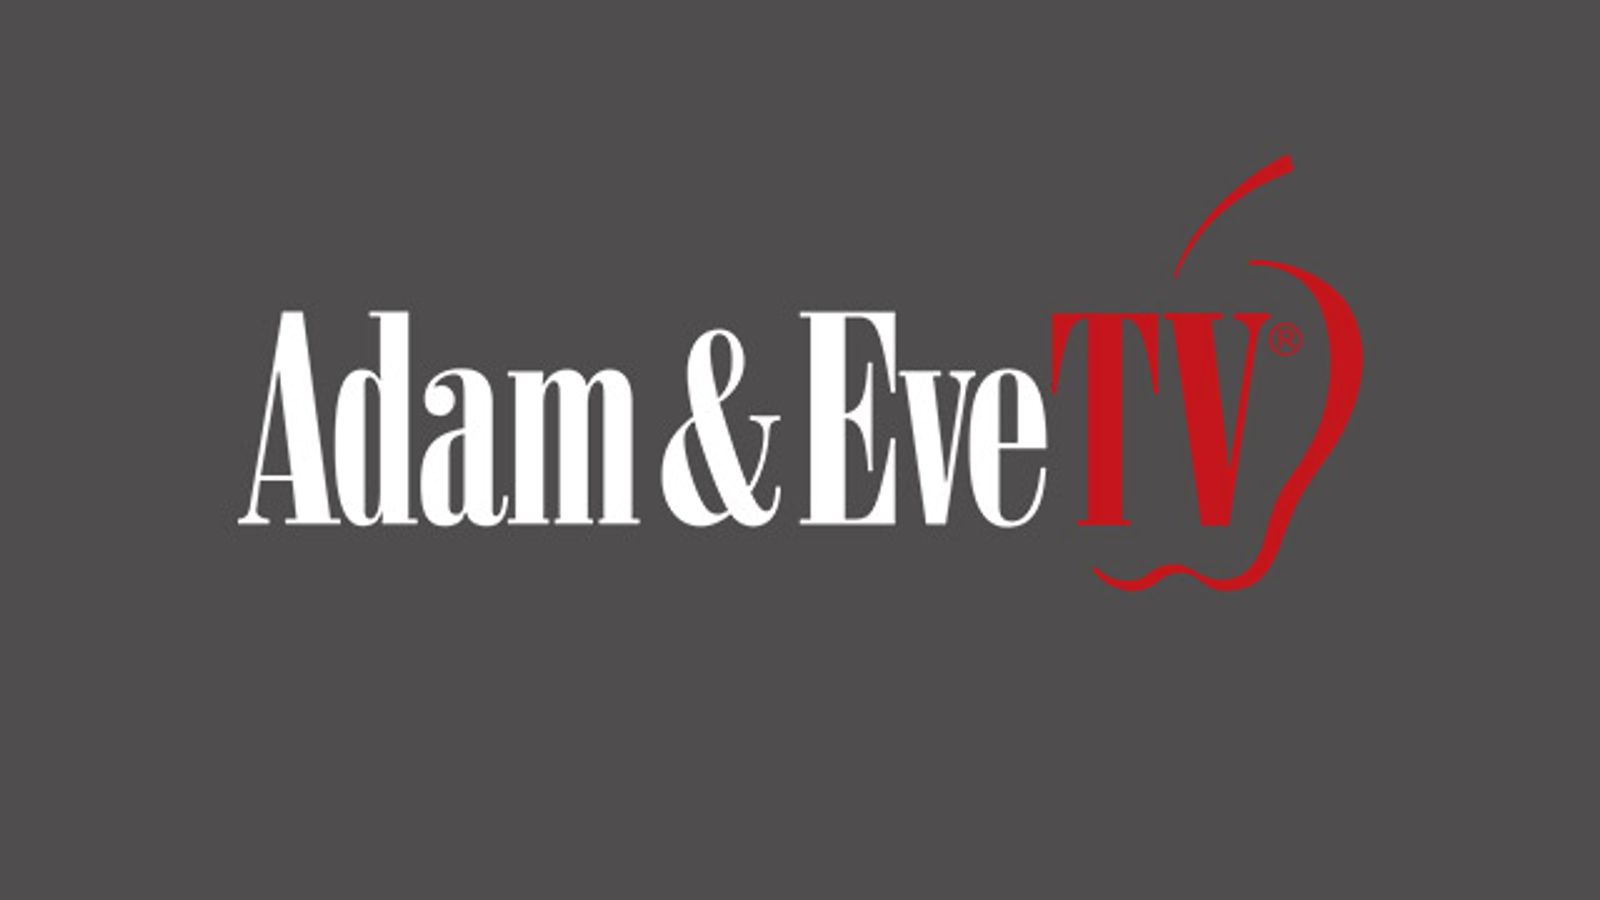 Gamelink and Adam & Eve Create AdamandEveTV.com